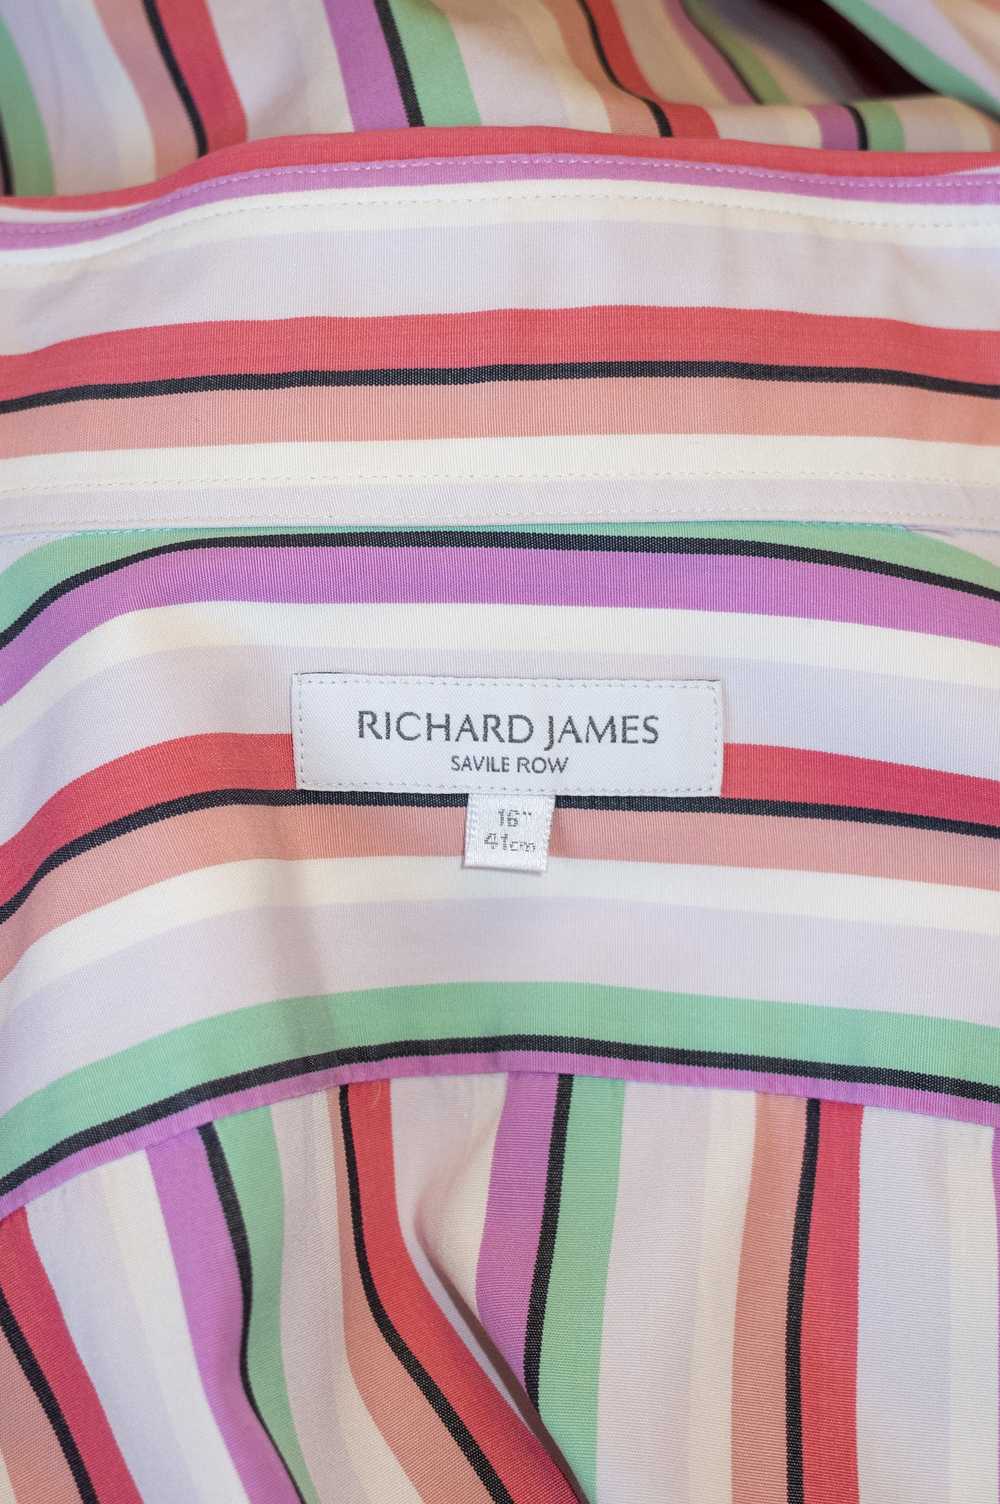 Richard James Candy Stripe Richard James Shirt - image 3